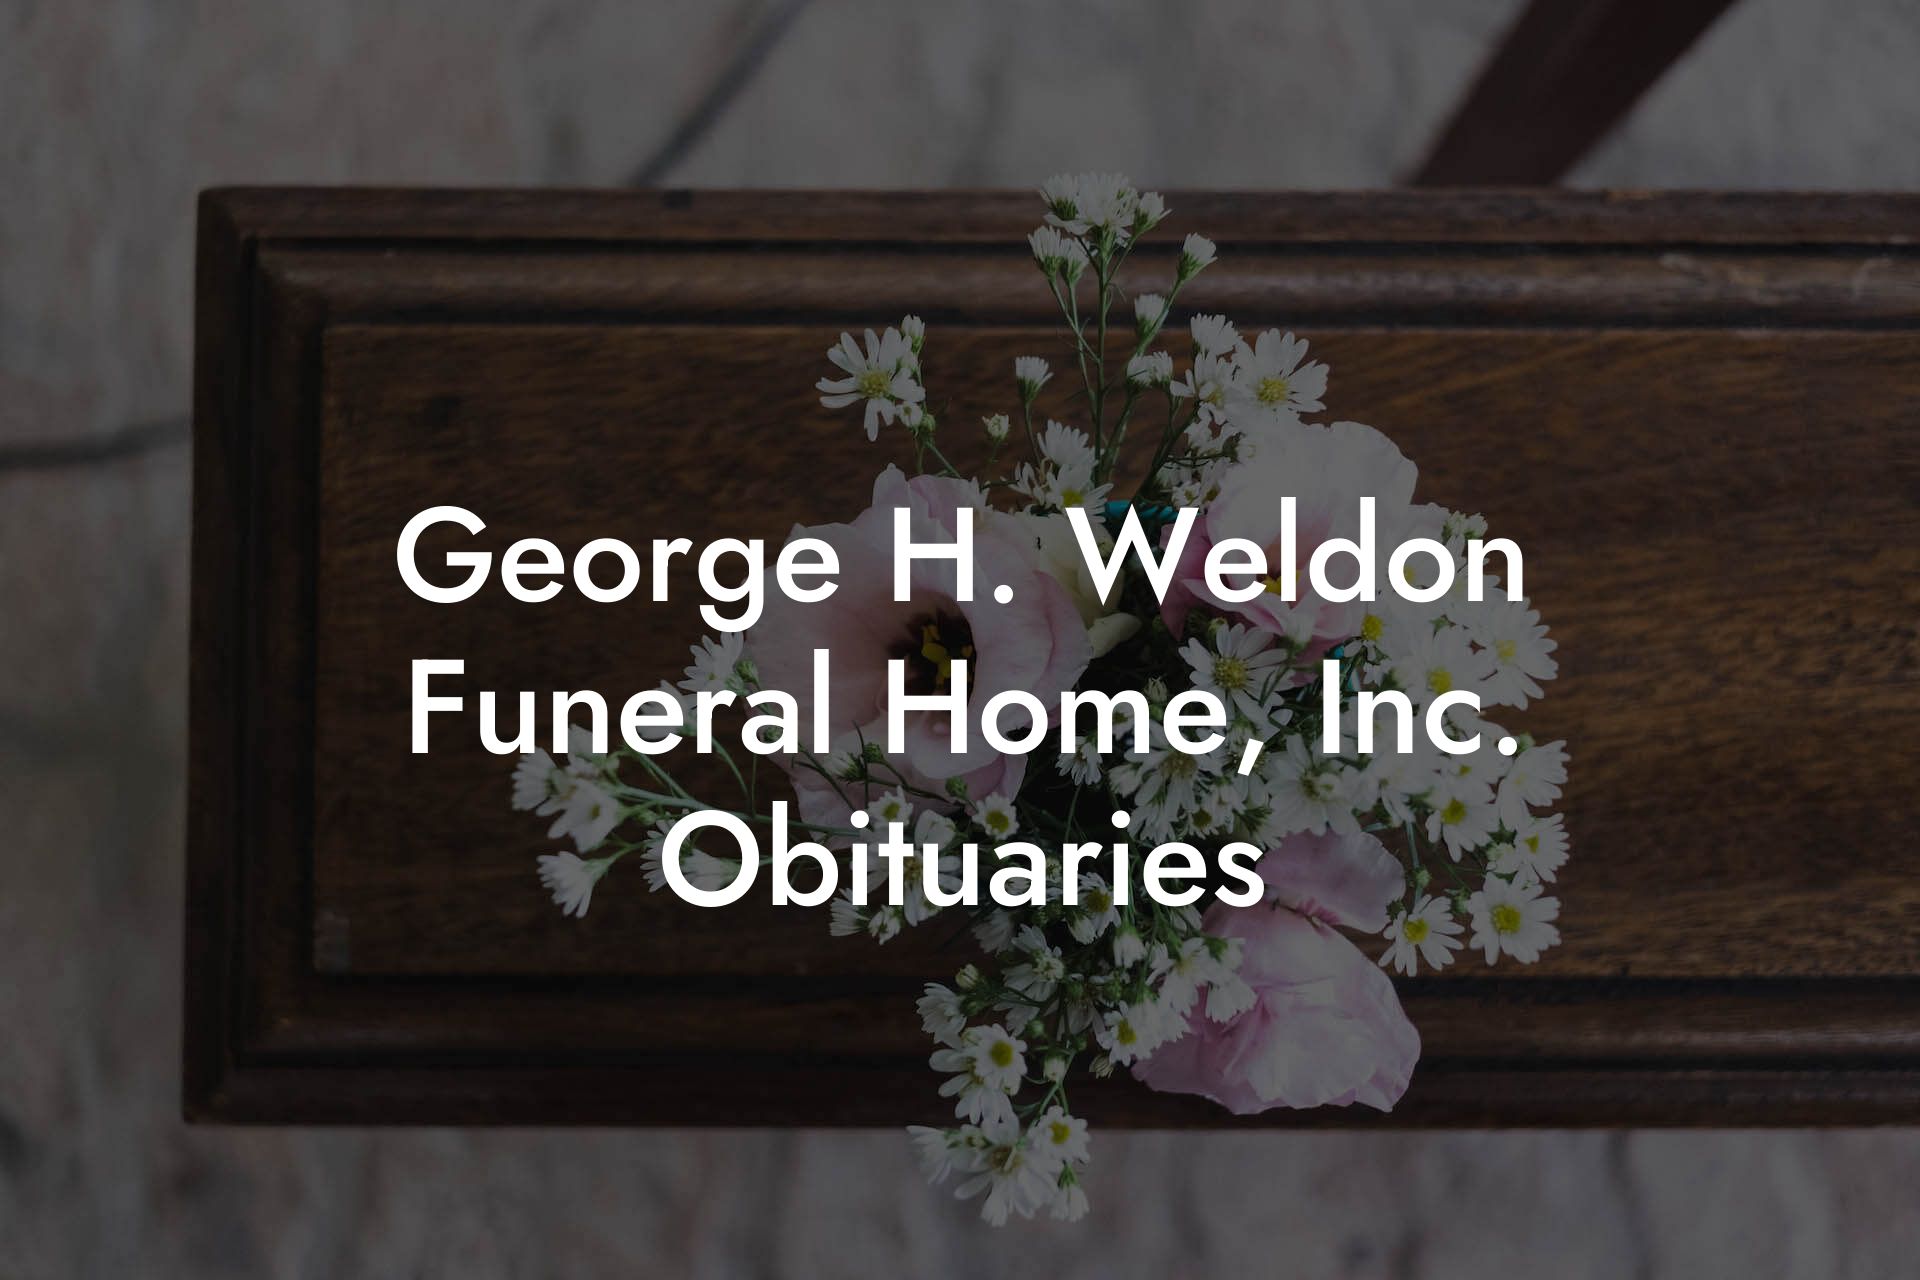 George H. Weldon Funeral Home, Inc. Obituaries